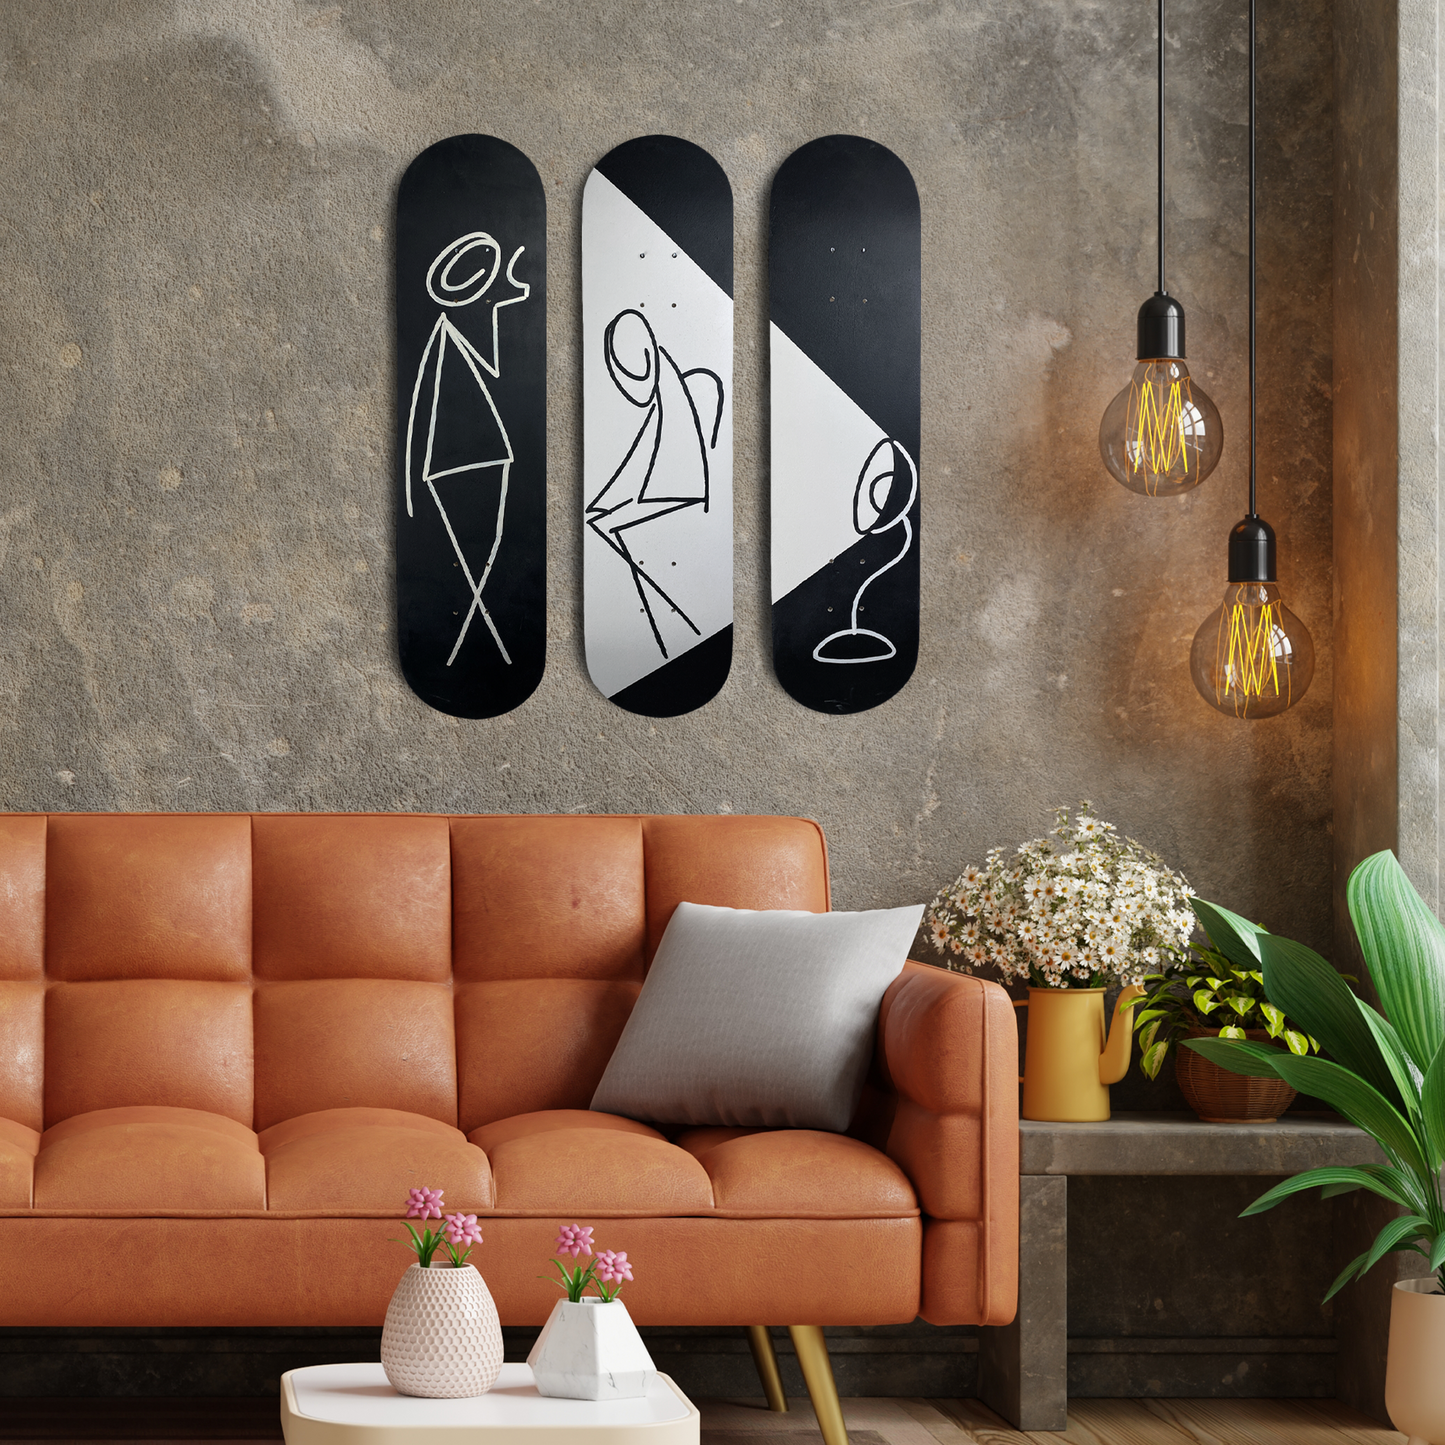 Skateboard Wall Art Set, "Darkside" Hand-Painted Wall Decor Set of 3